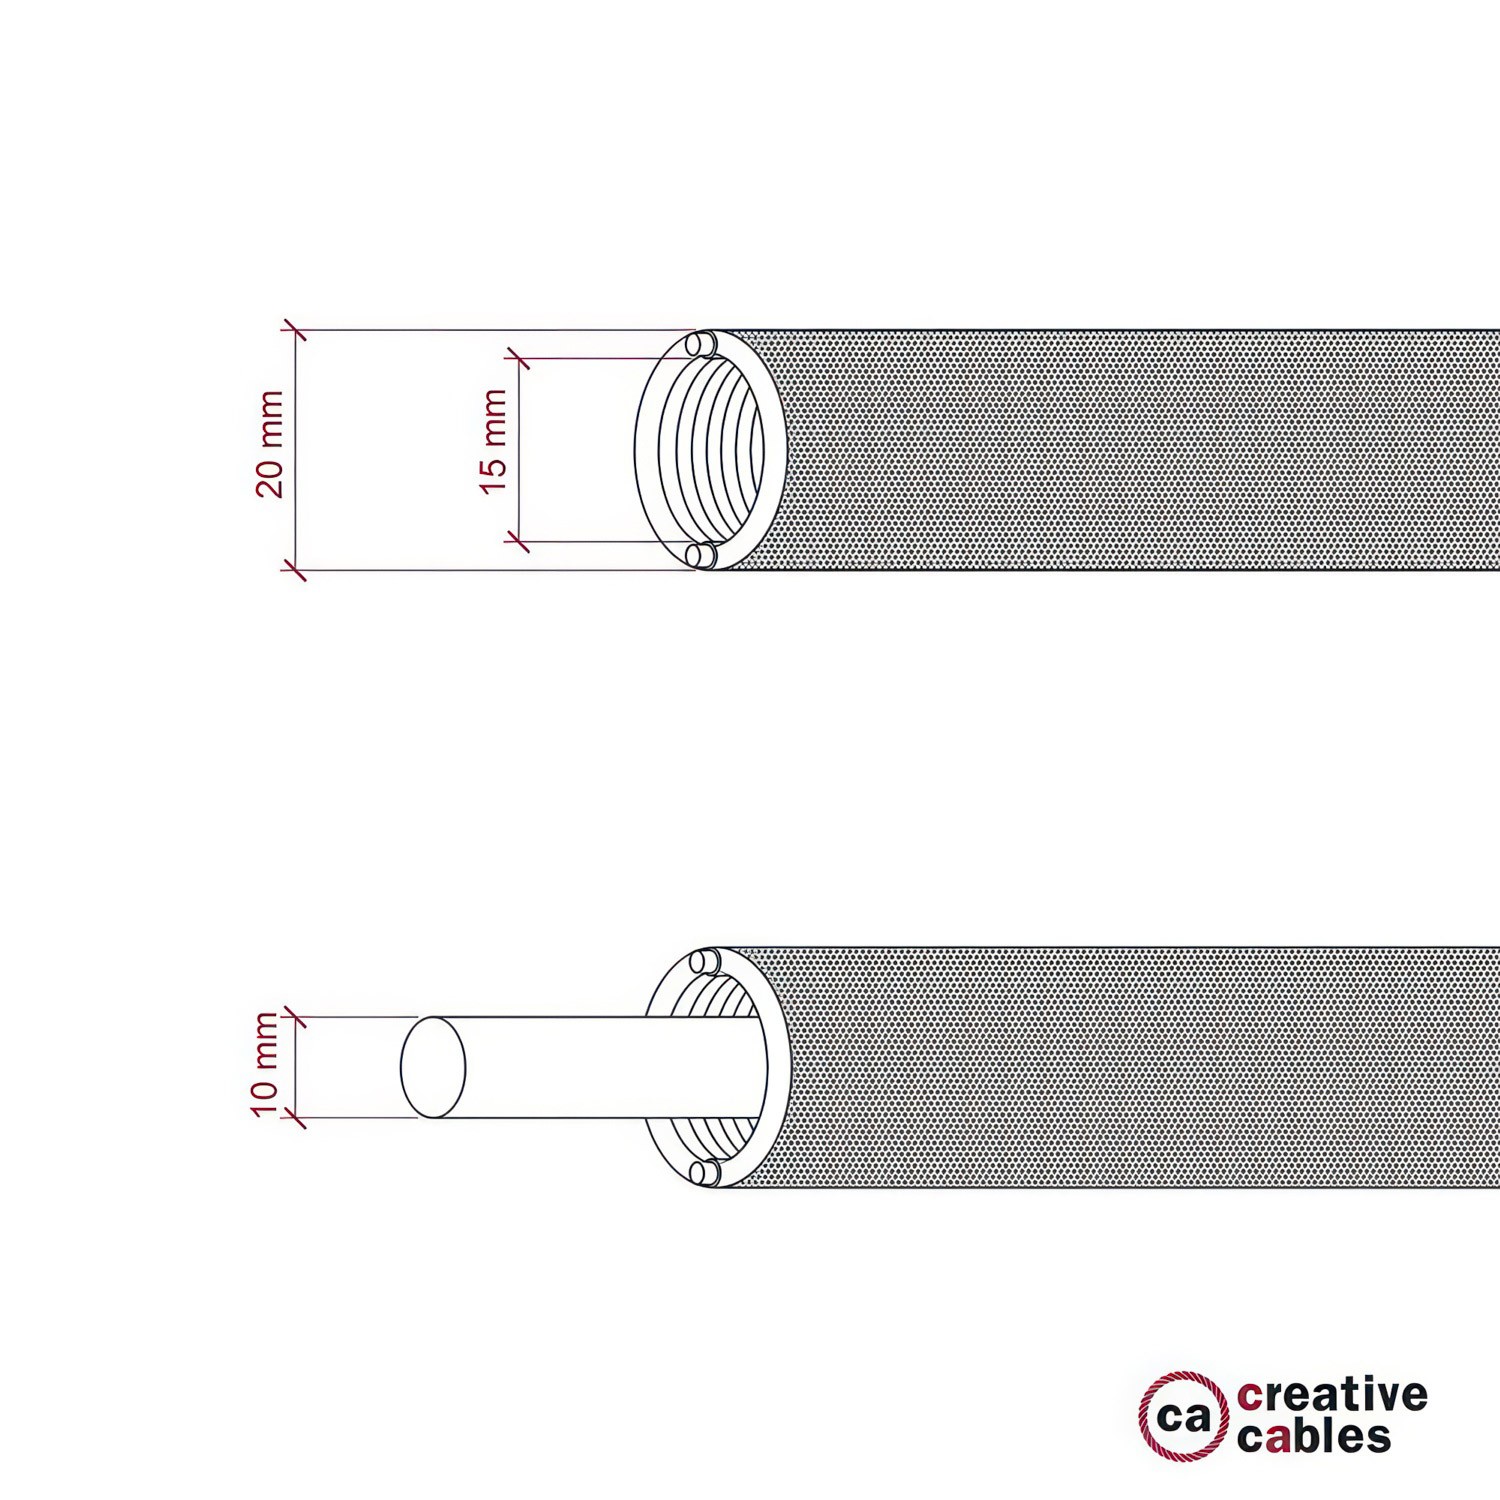 Rode design flexibele elektrabuis met stof omweven - Creative-Tube rood viscose RM09 20 mm